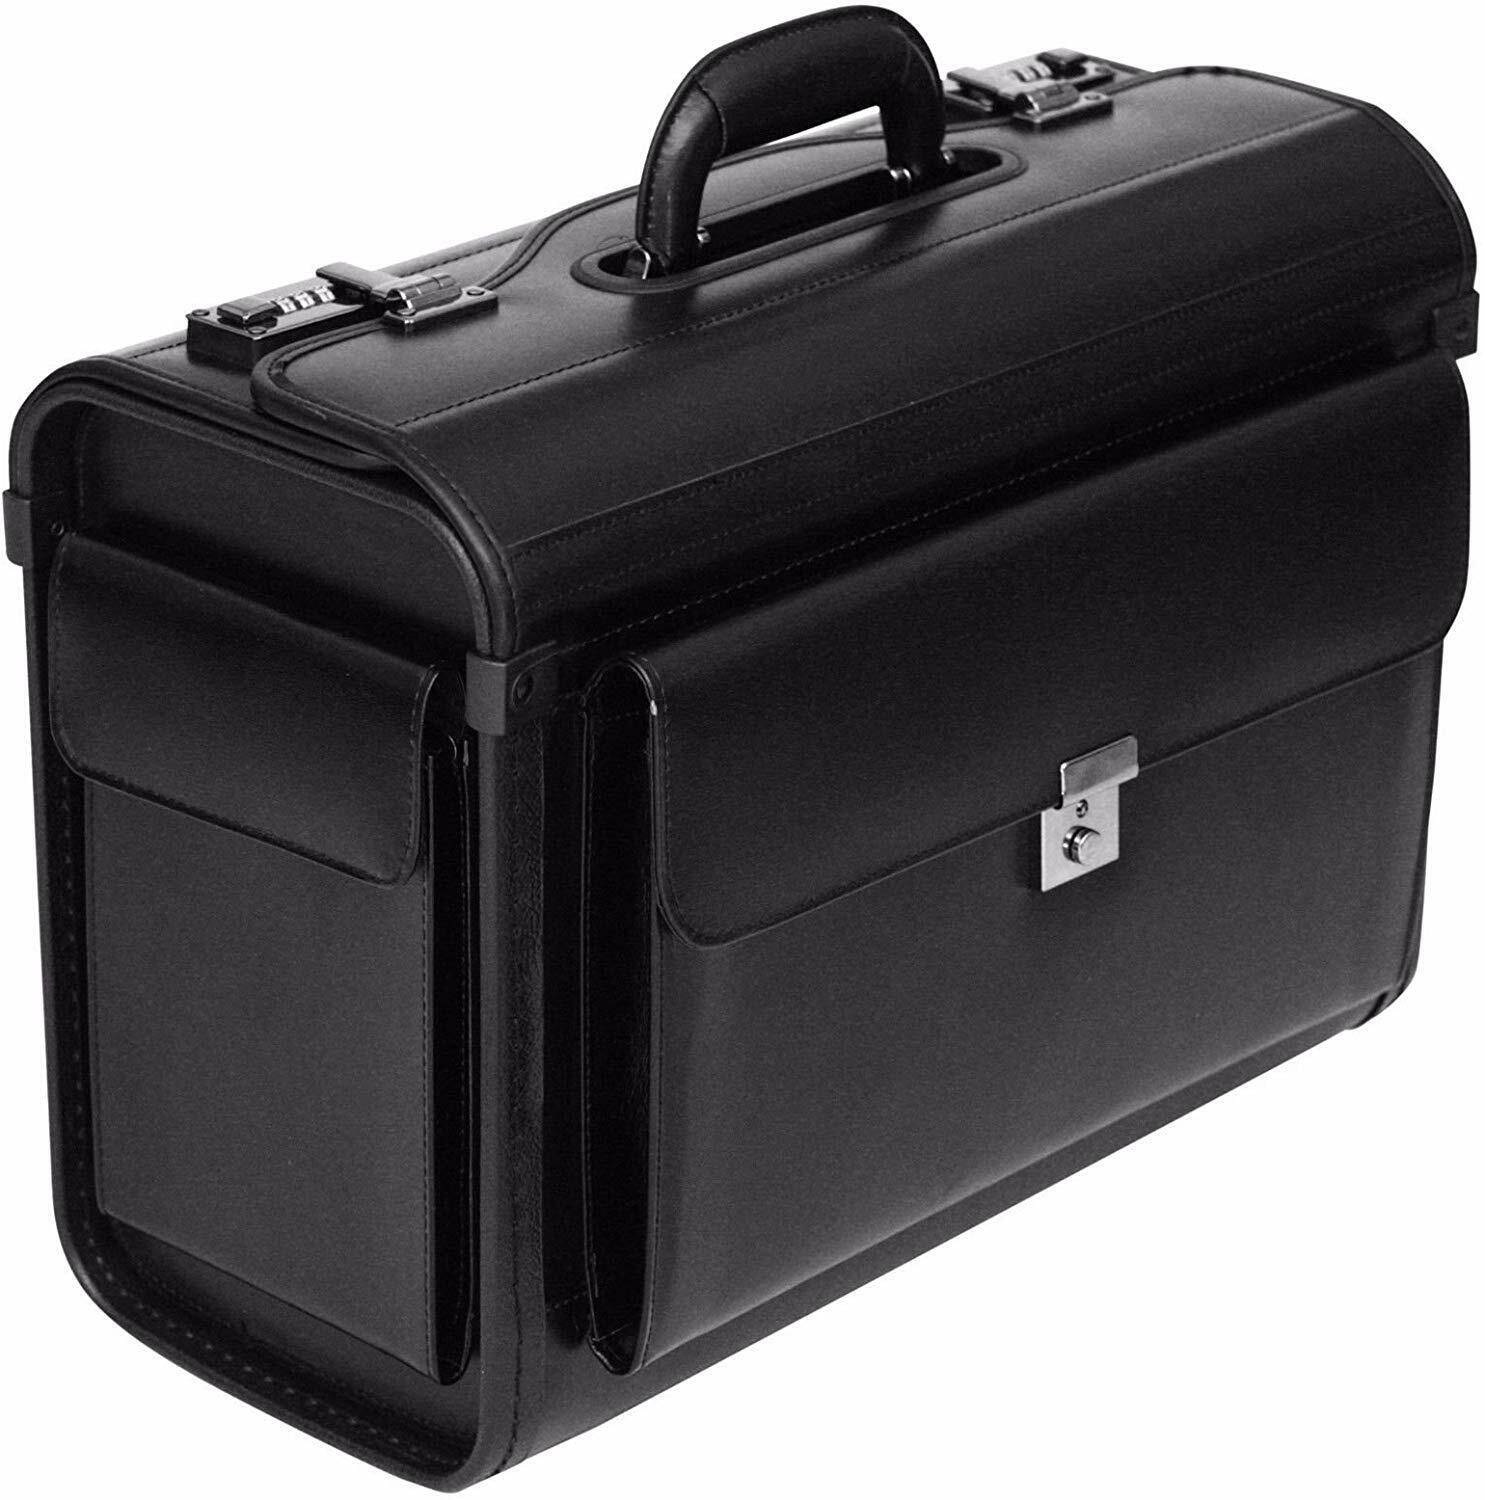 New Executive Flight Pilot Case Business Laptop Travel Work Cabin Bag Briefcase 